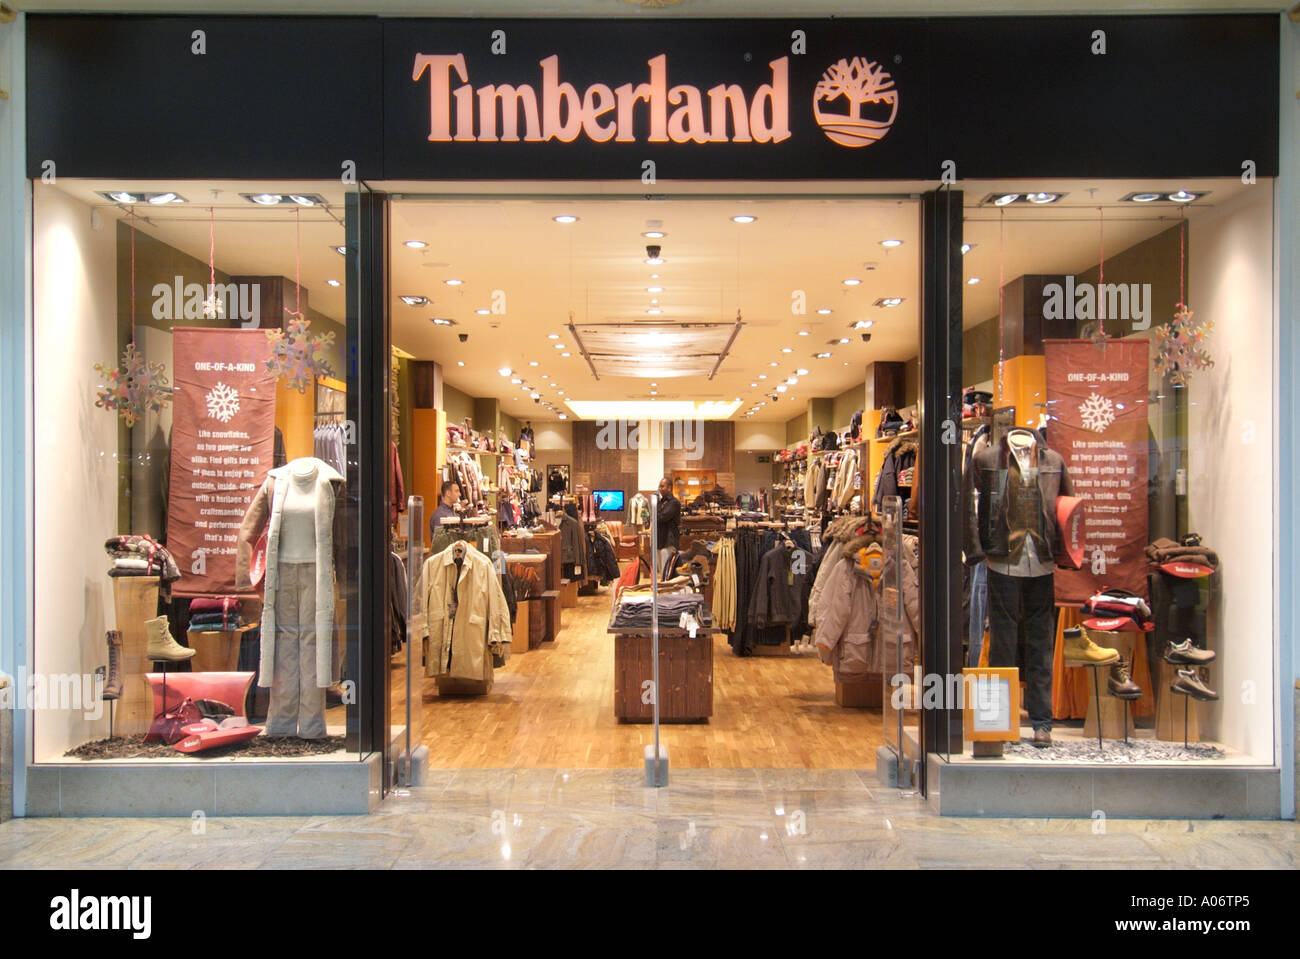 timberland outlet uk, OFF 78%,Best Deals Online.,